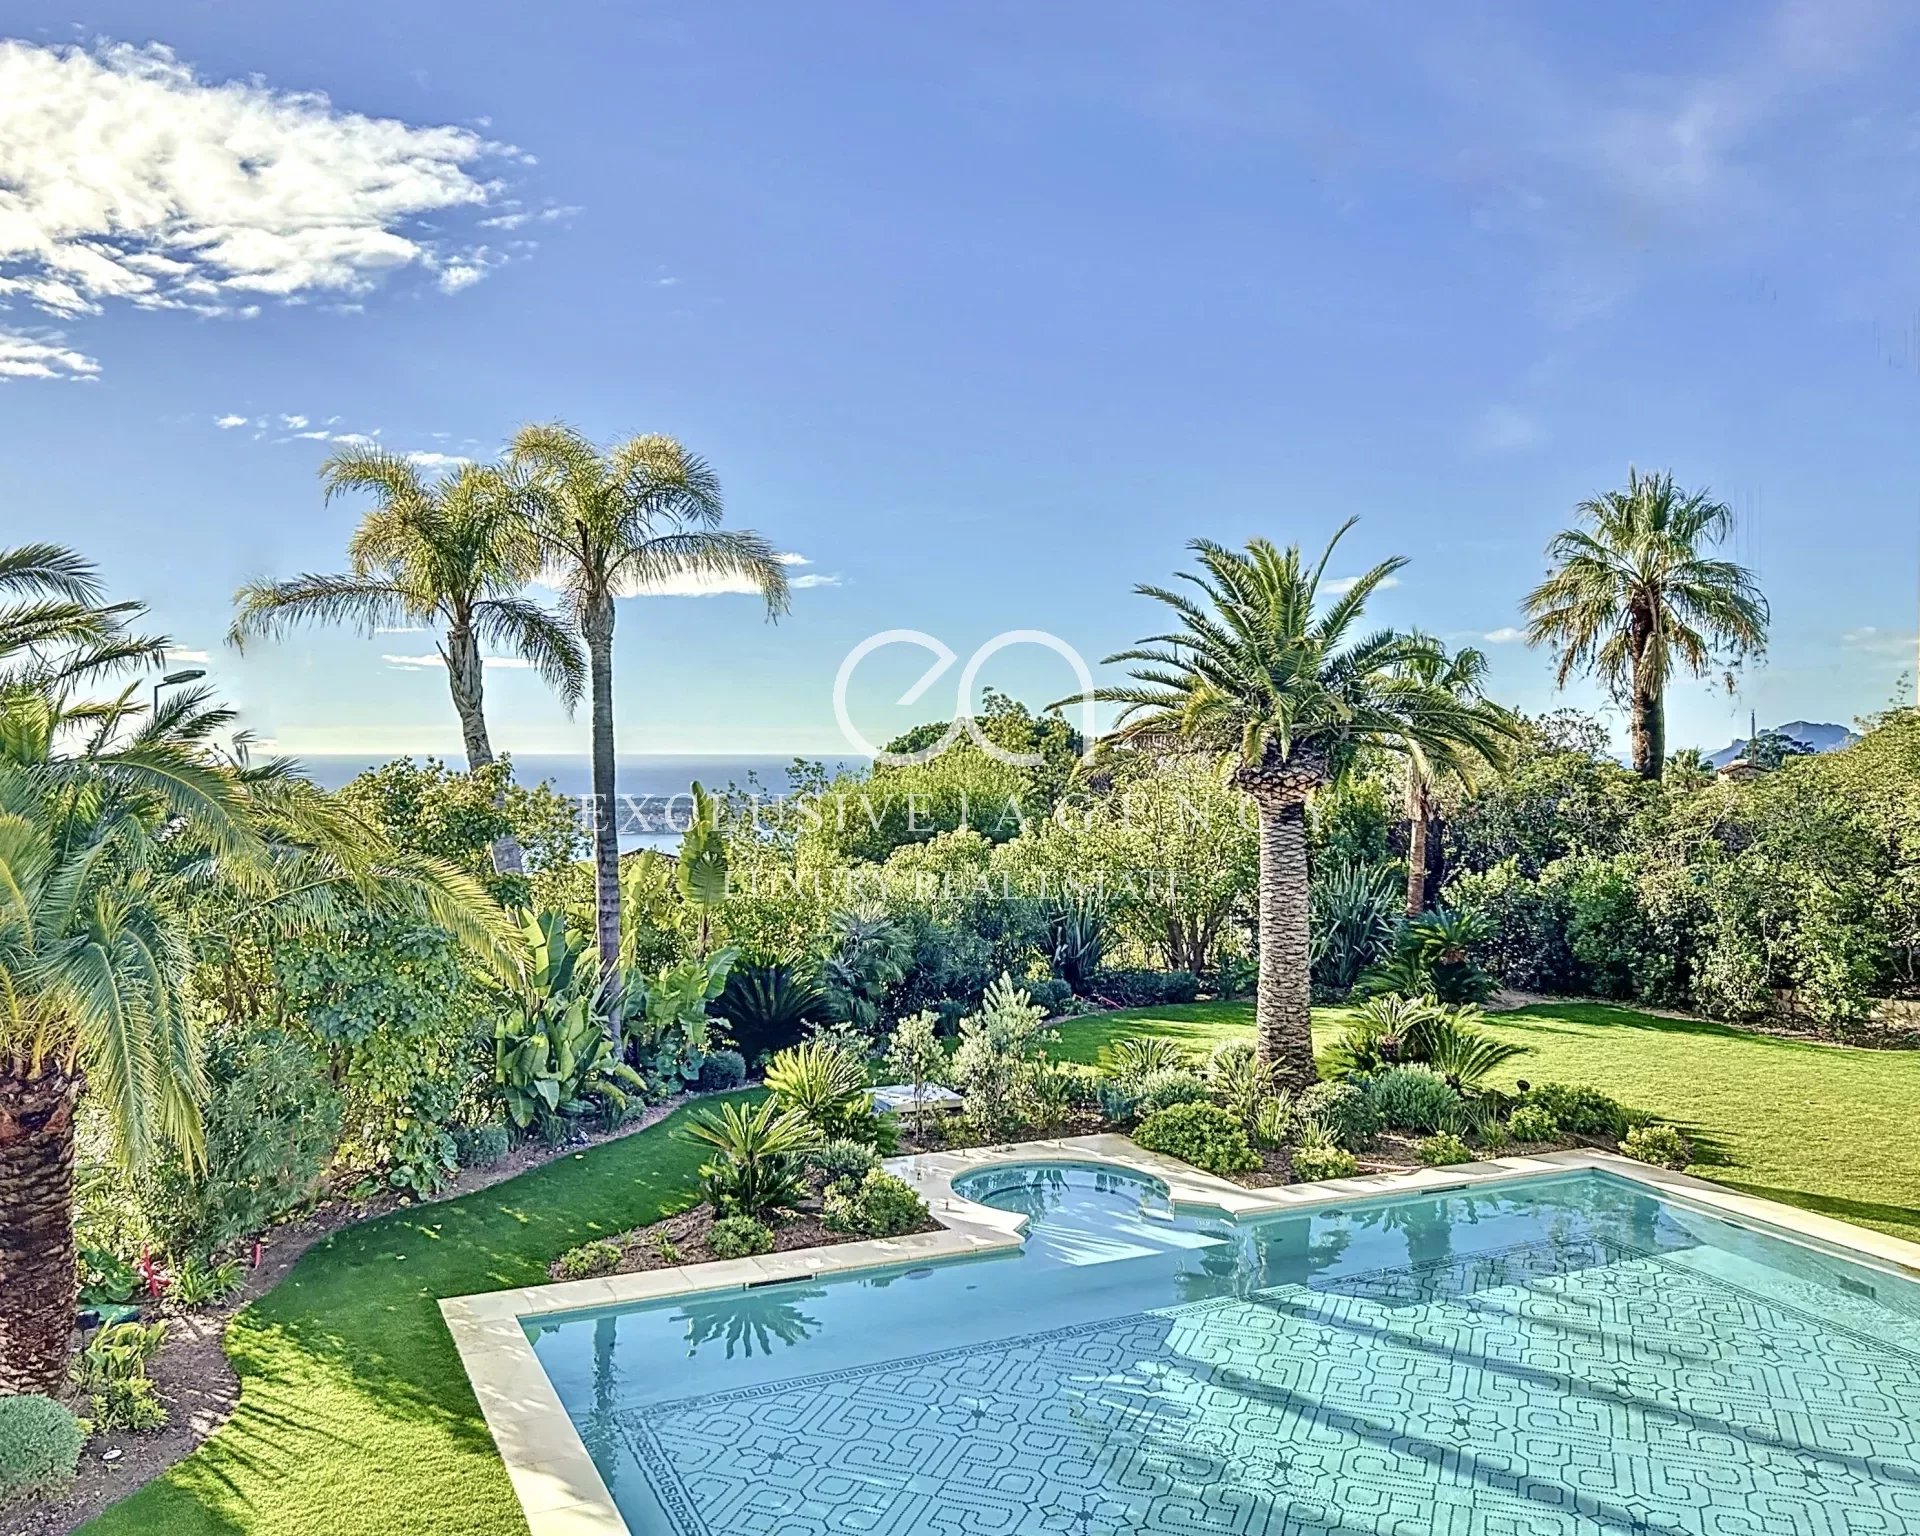 Location Super Cannes villa 800m² avec vue mer